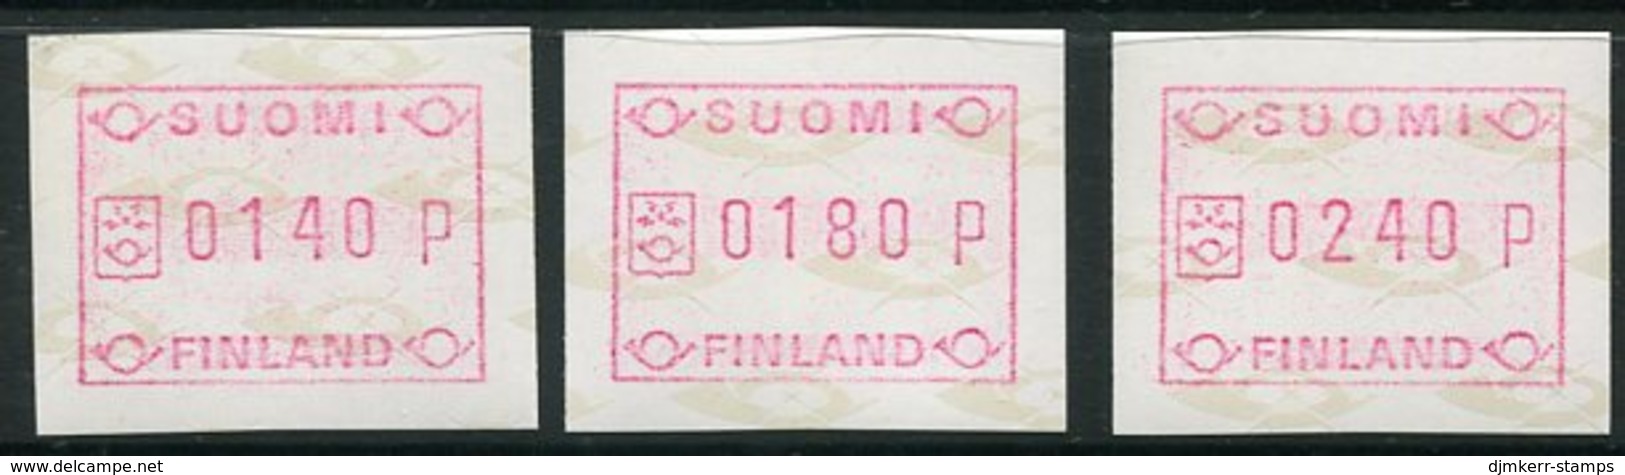 FINLAND 1988 Definitive  ATM, Three Values MNH / **..  Michel 3 - Machine Labels [ATM]